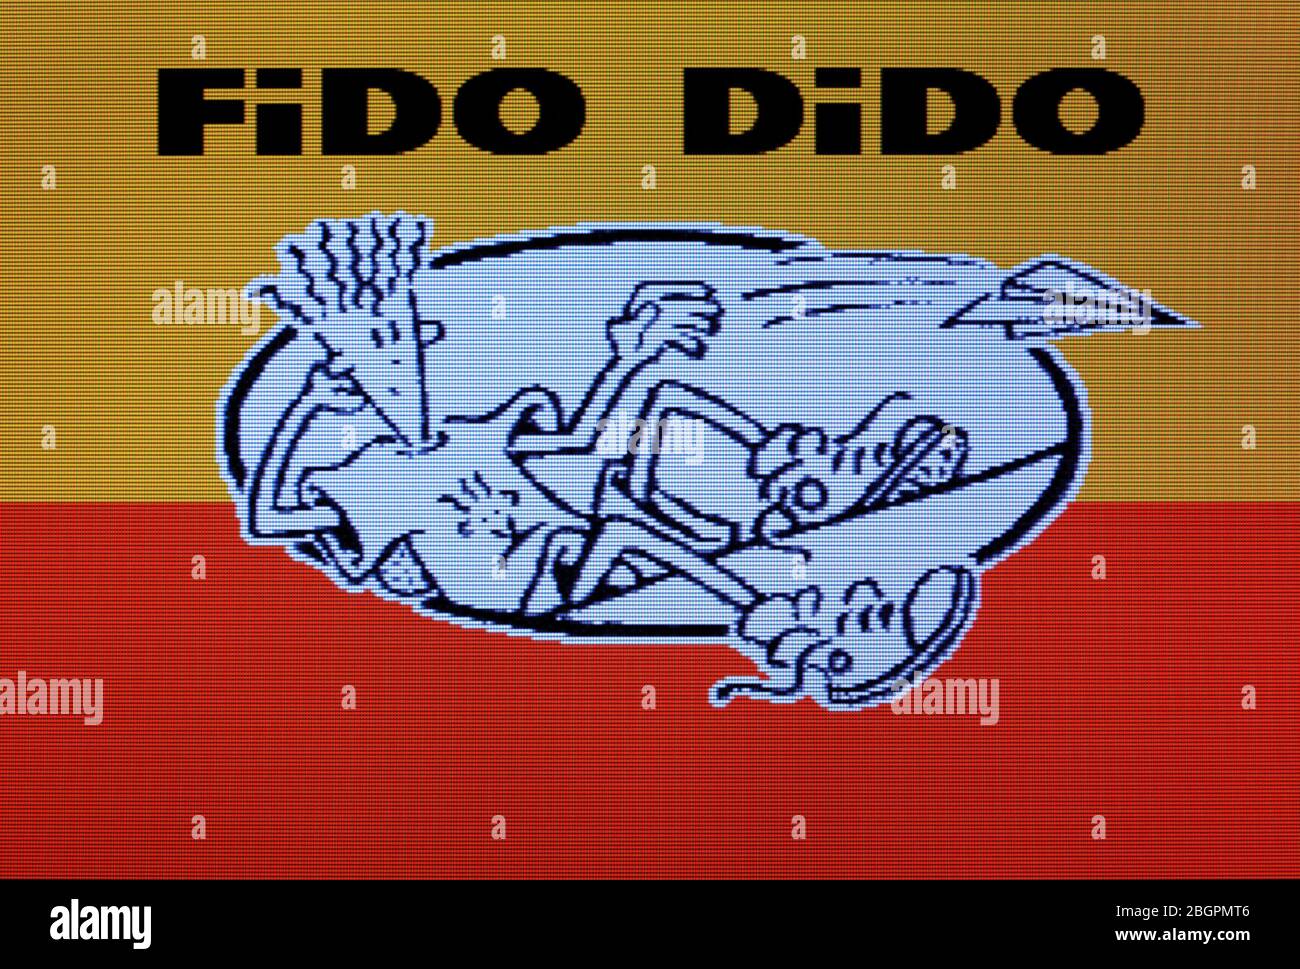 Fido Dido - Sega Genesis Mega Drive - Editorial use only Stock Photo - Alamy